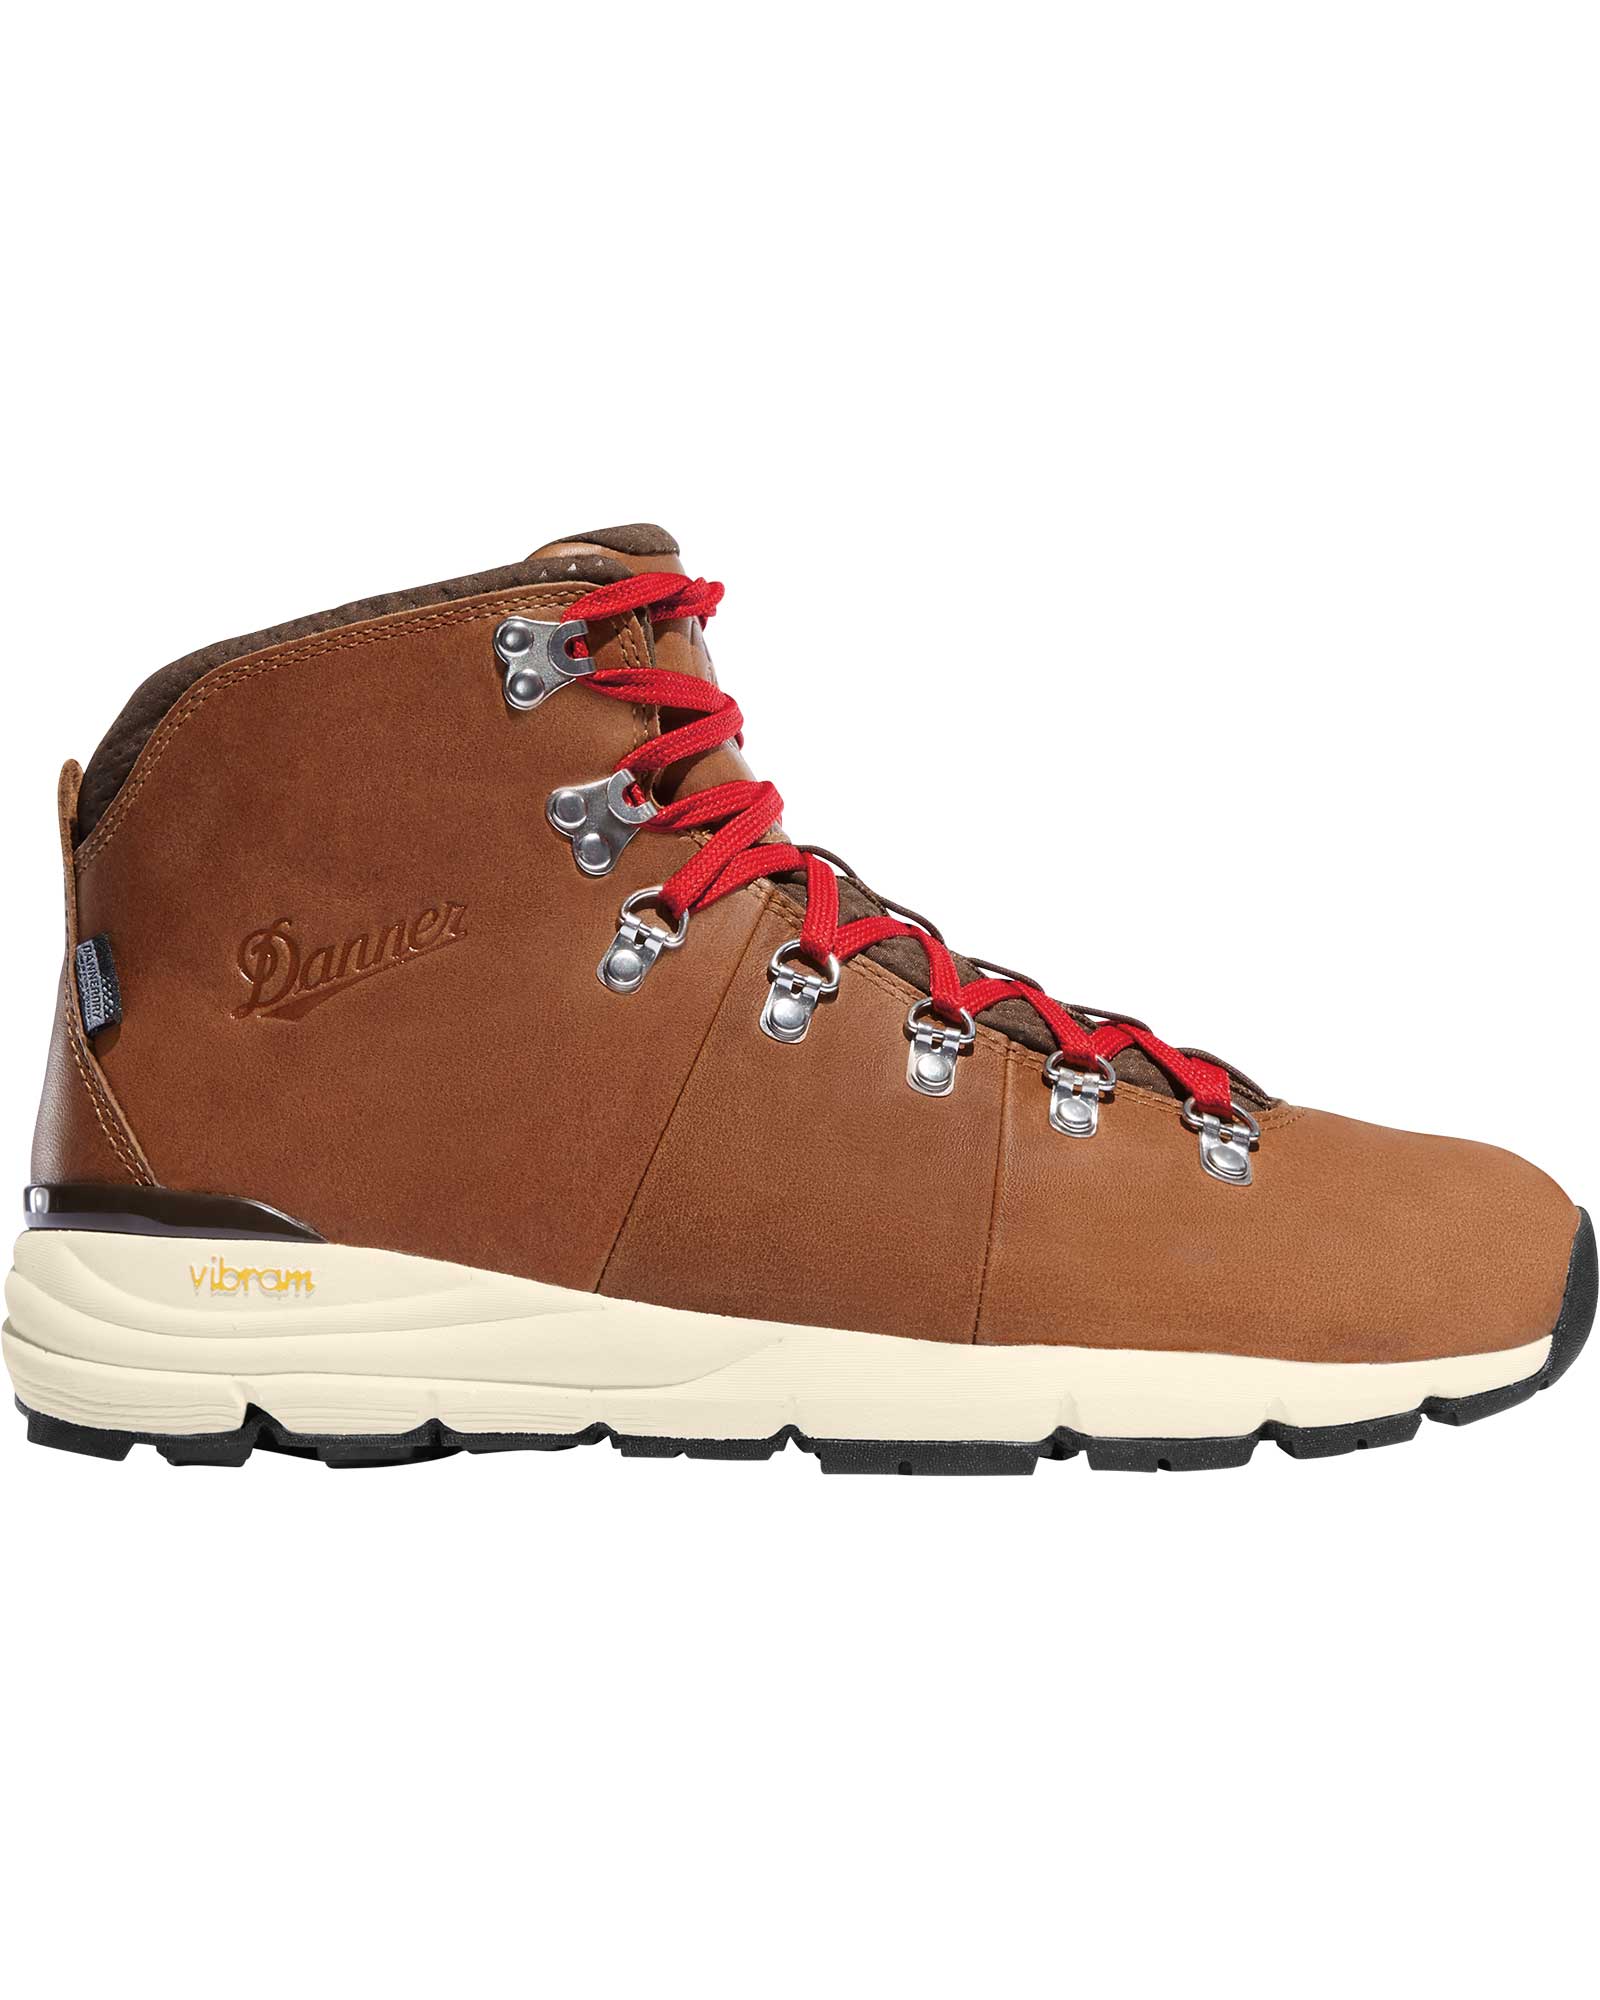 Danner Men’s Mountain 600 4.5" Boots - Saddle Tan UK 8.5